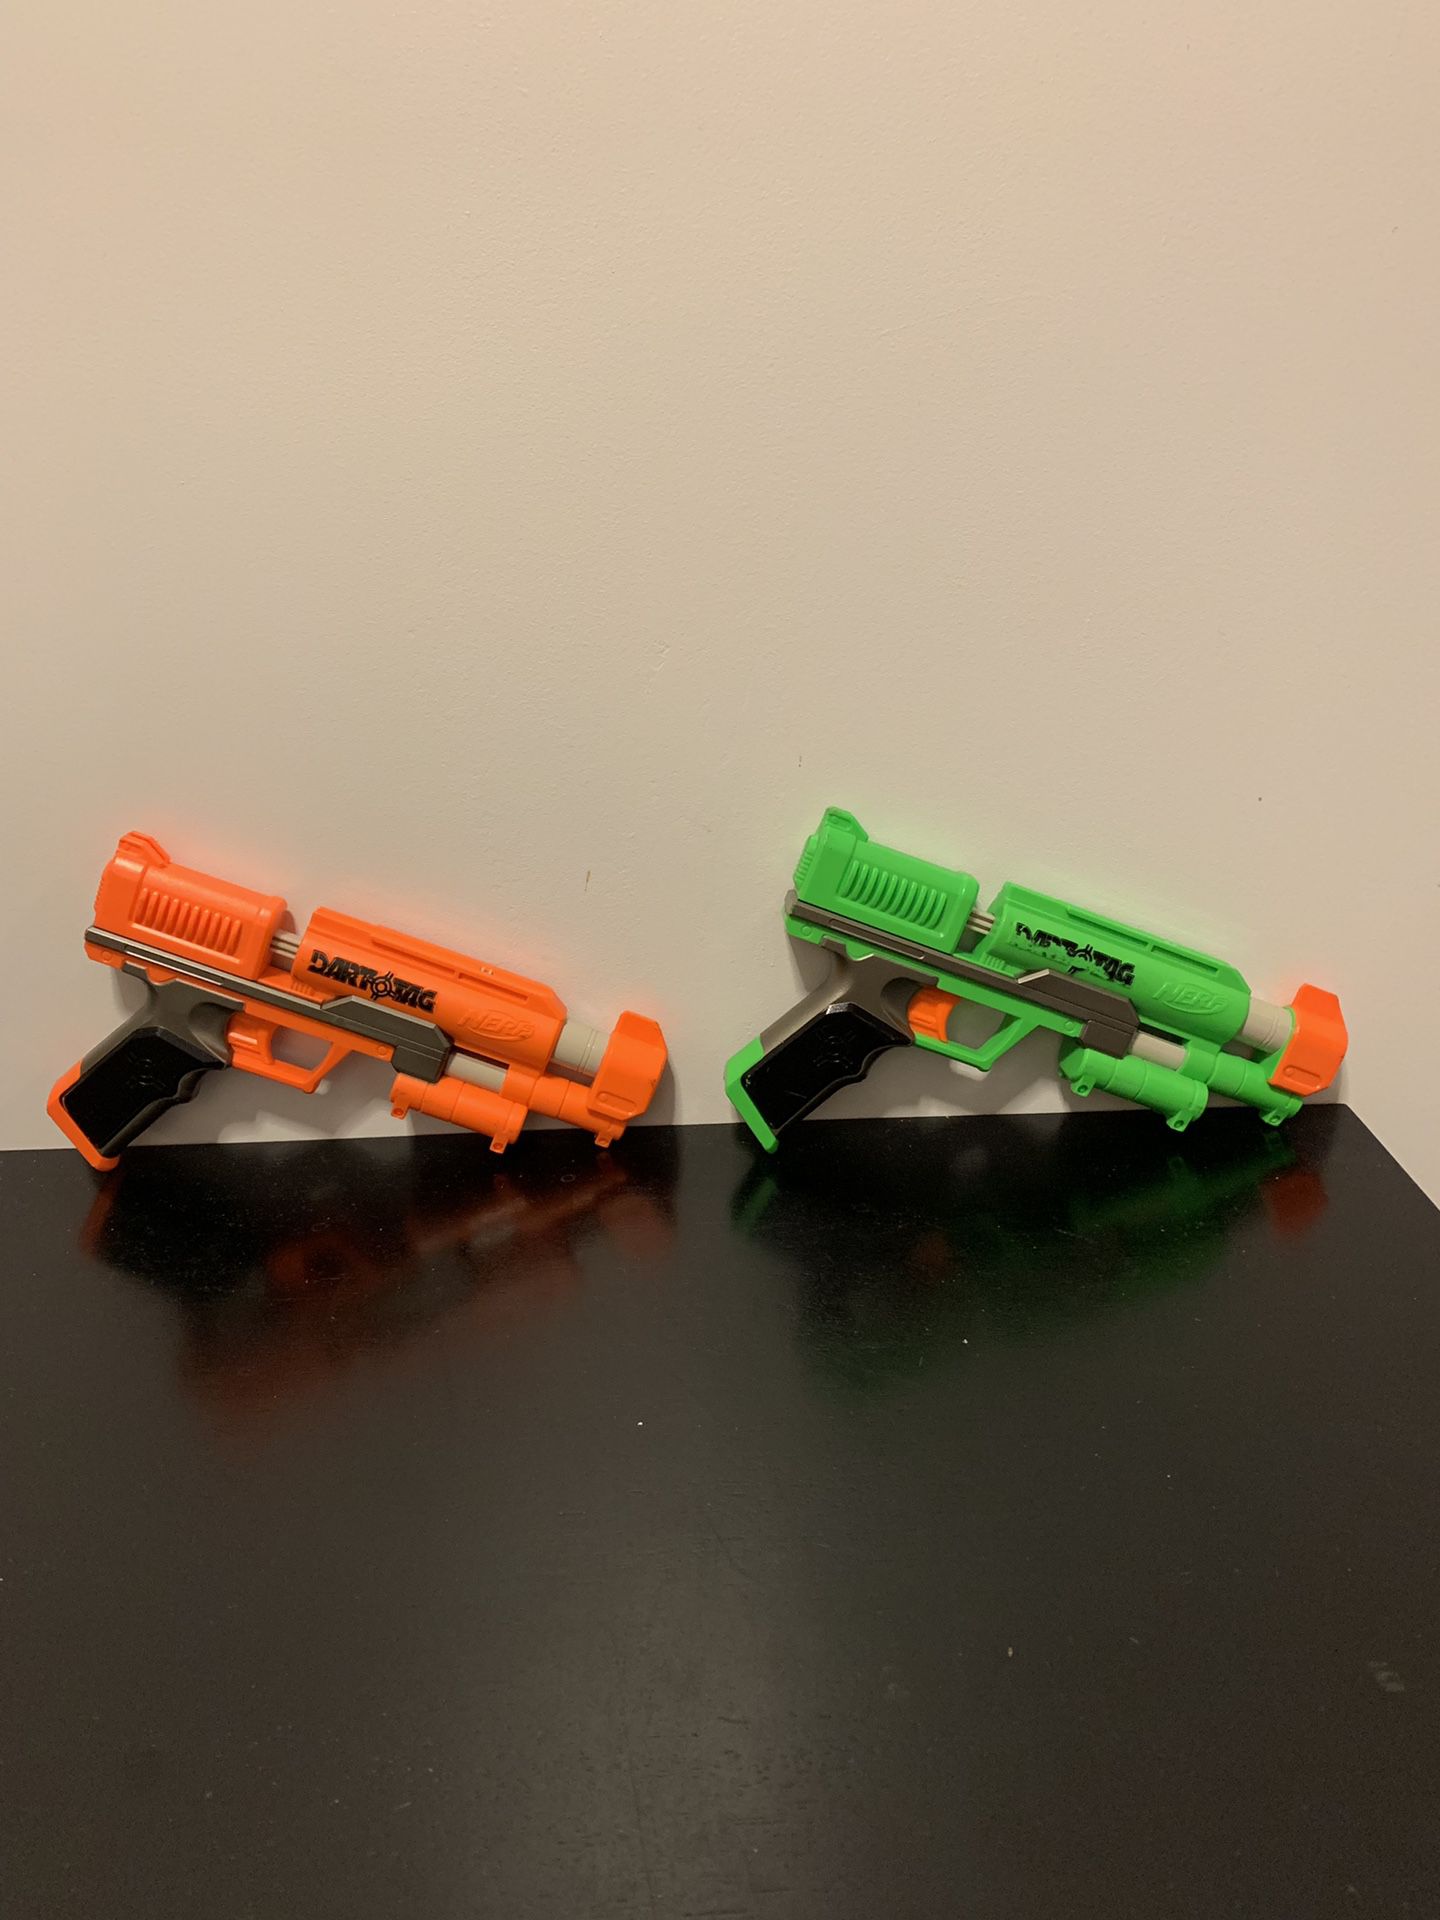 Nerf Dart Tag Guns (Orange and Green)